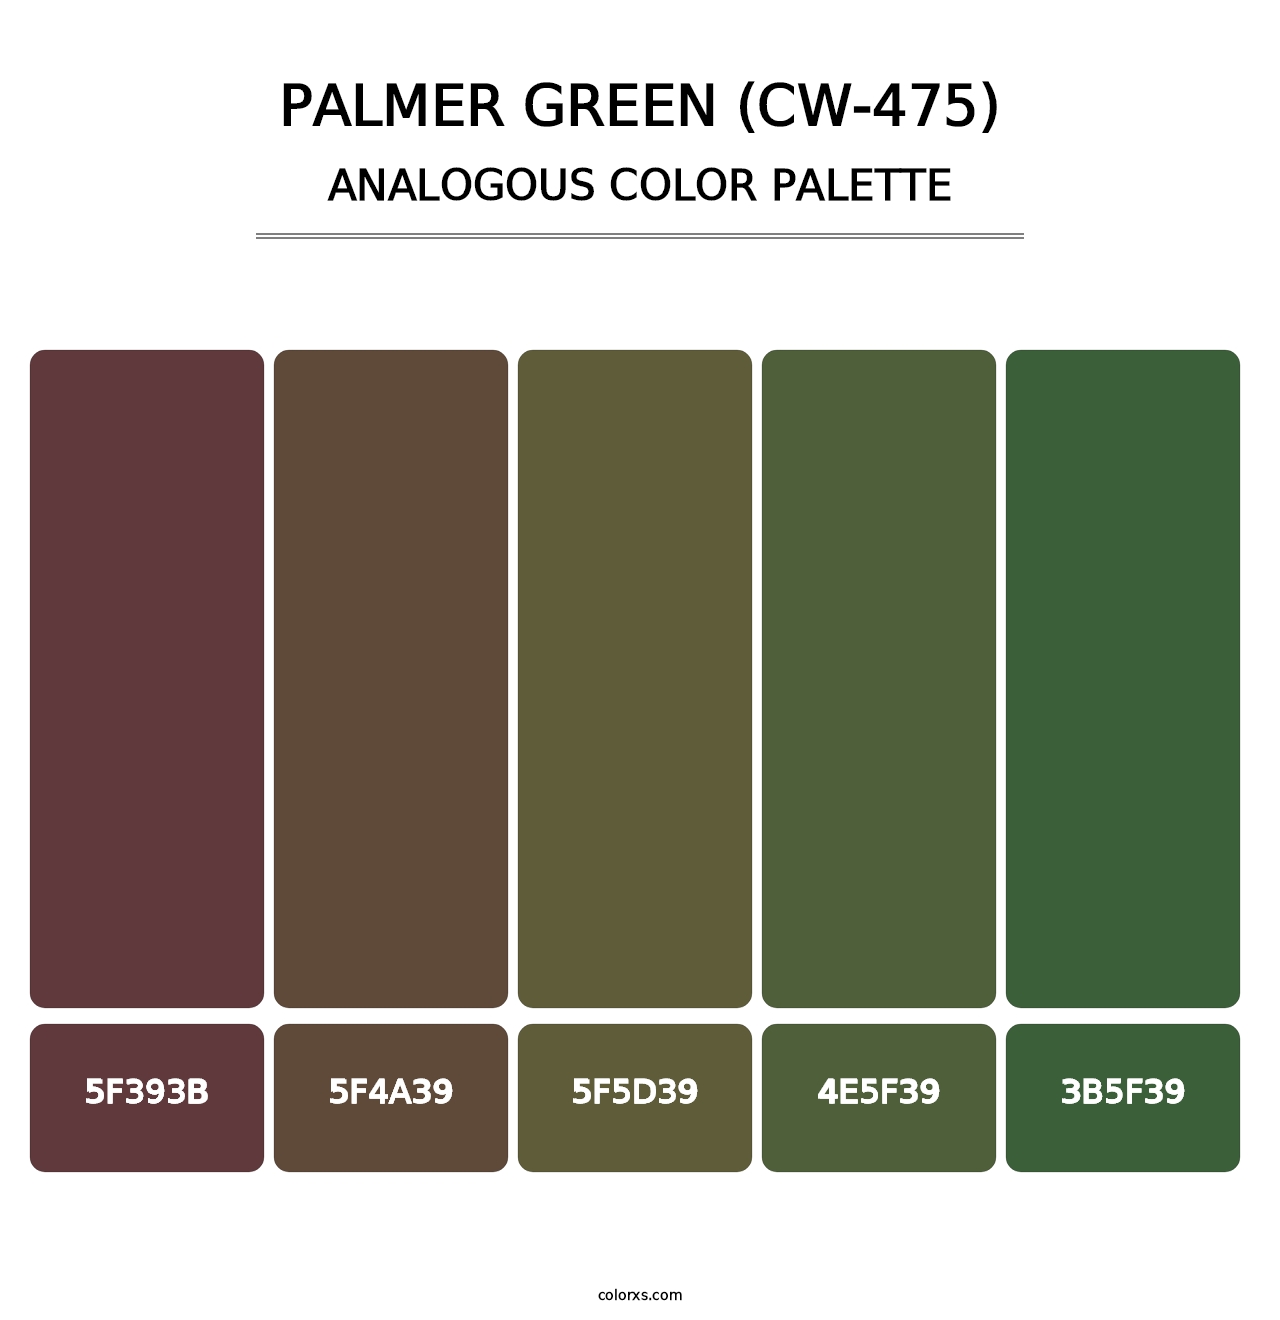 Palmer Green (CW-475) - Analogous Color Palette